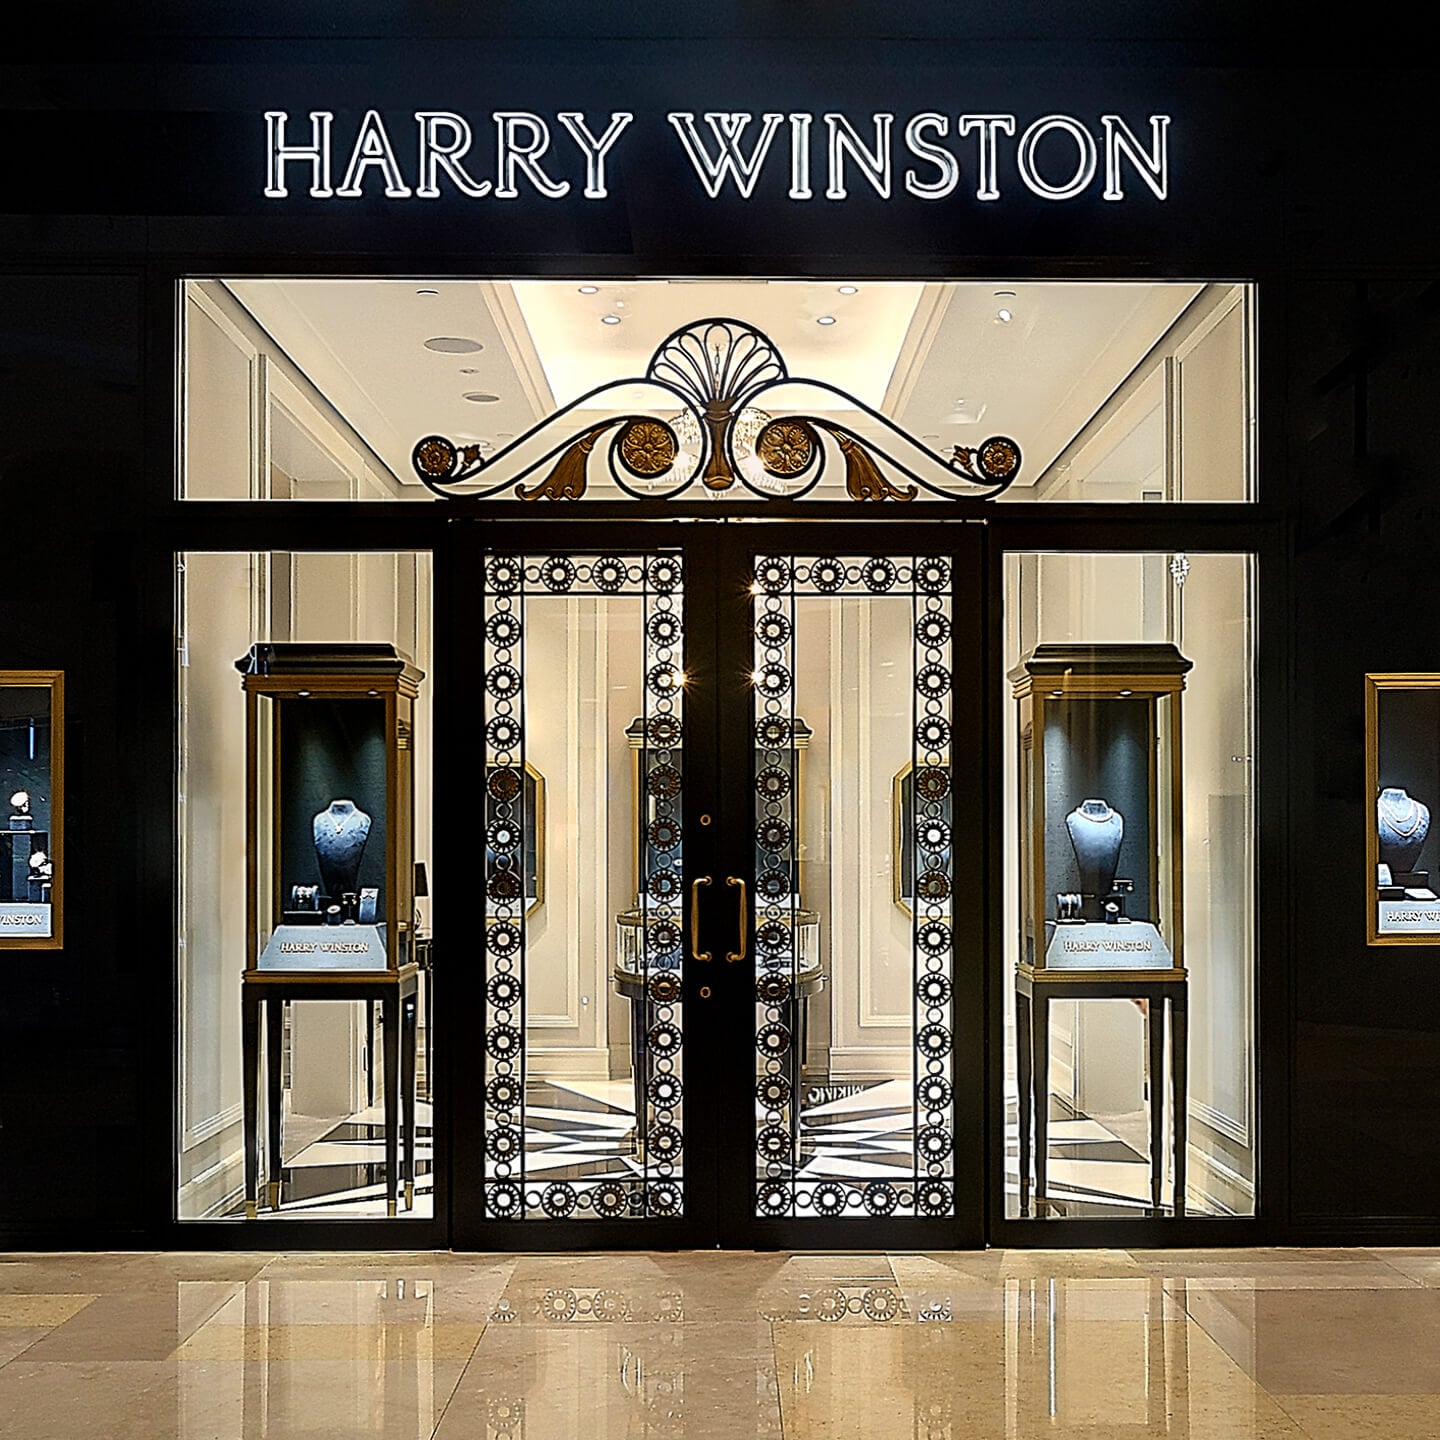 Façade of the Harry Winston Singapore Salon